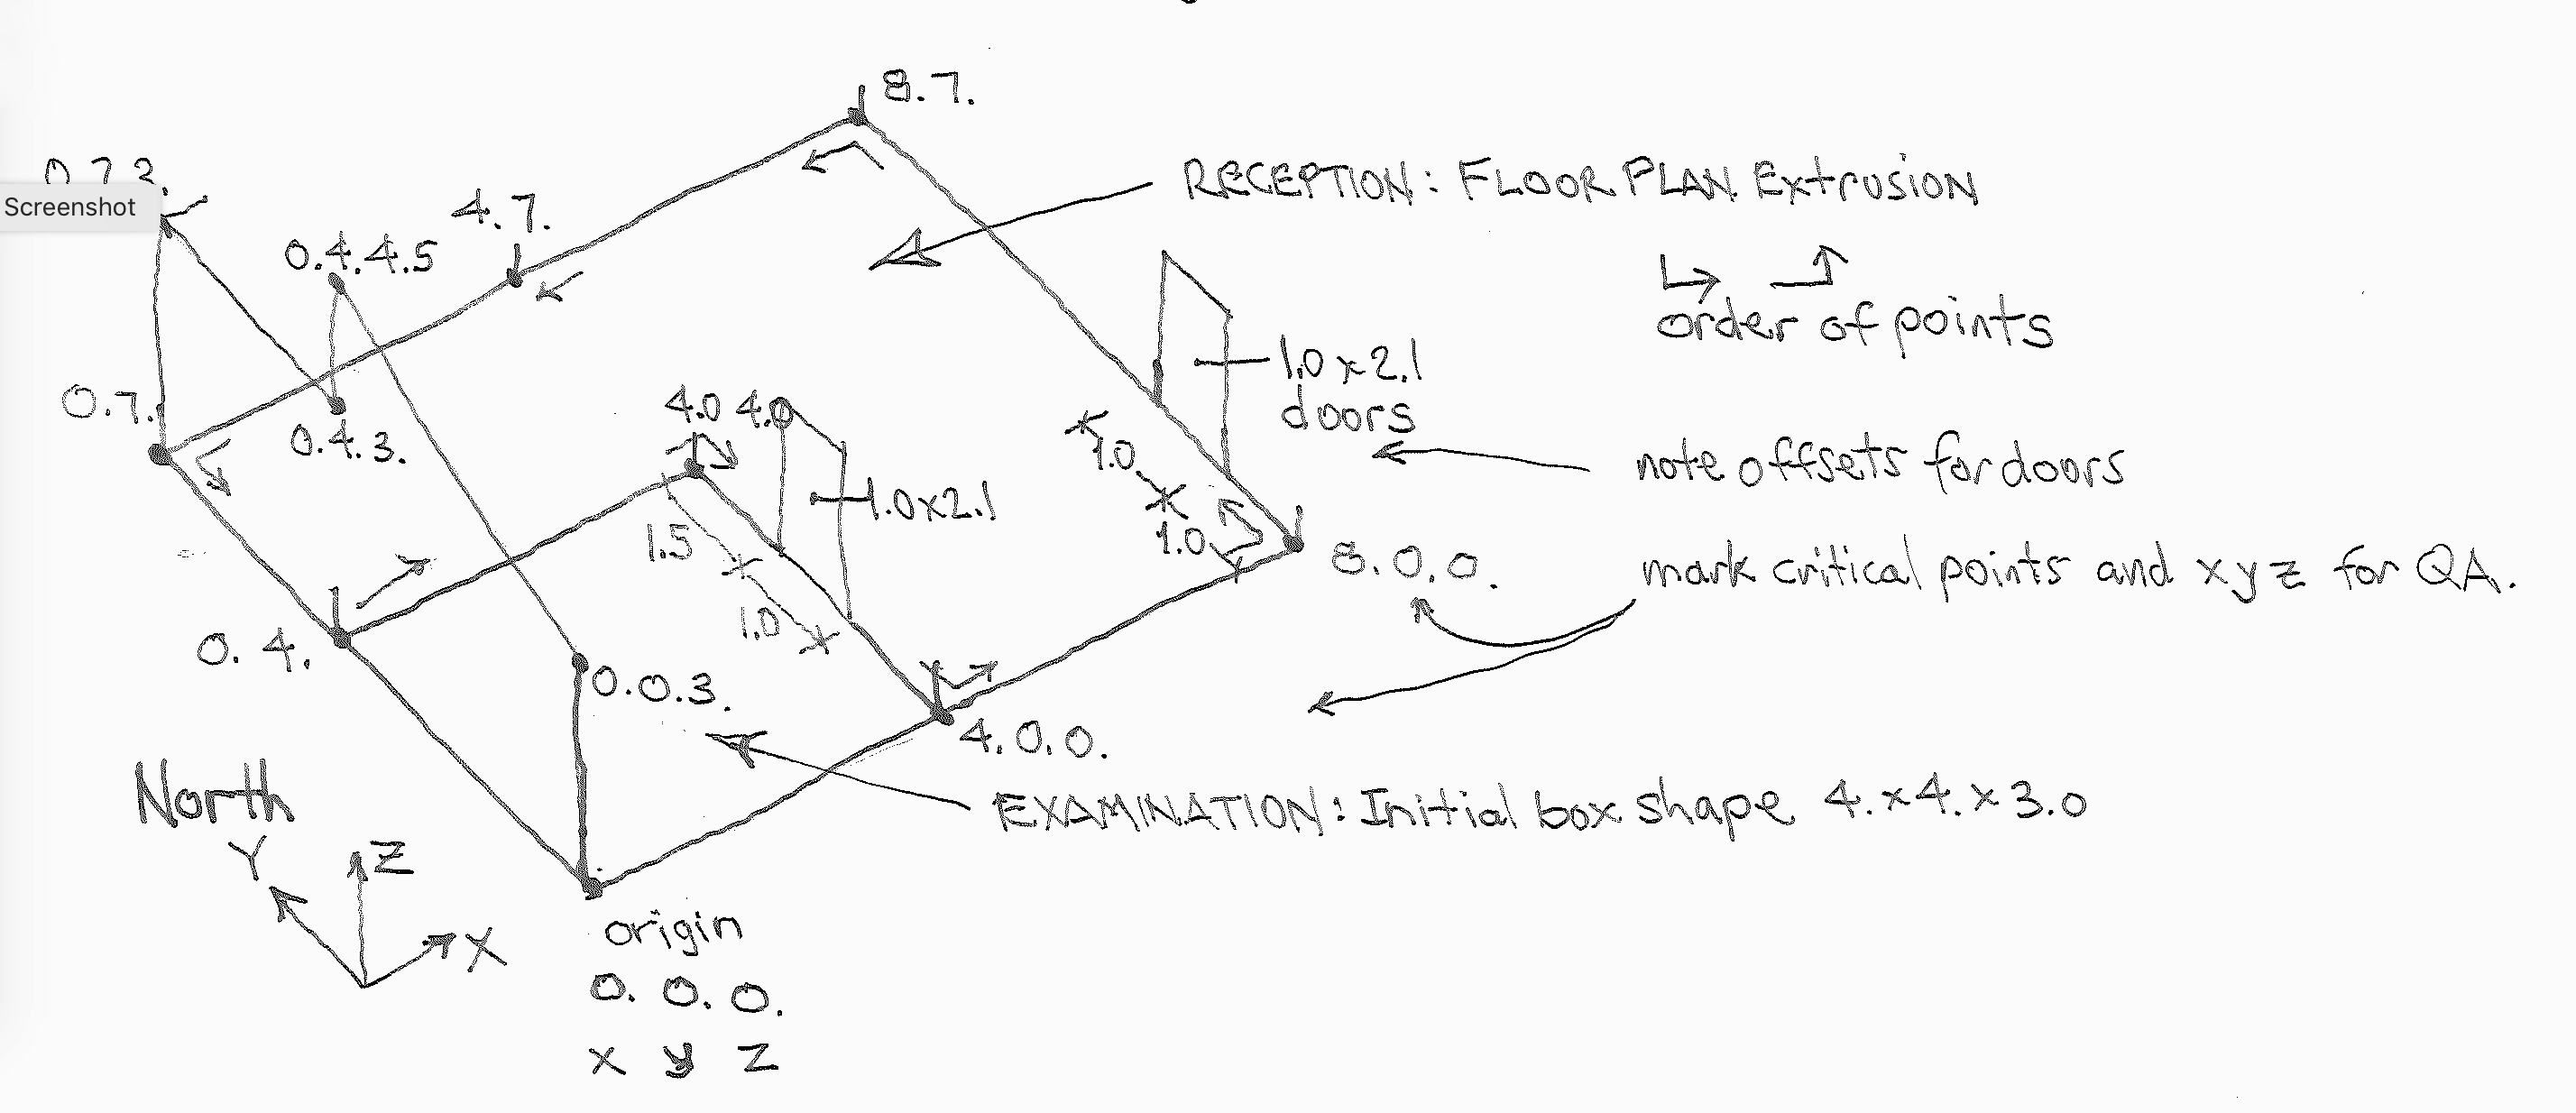 Figure E2.3.1: Planning sketch.